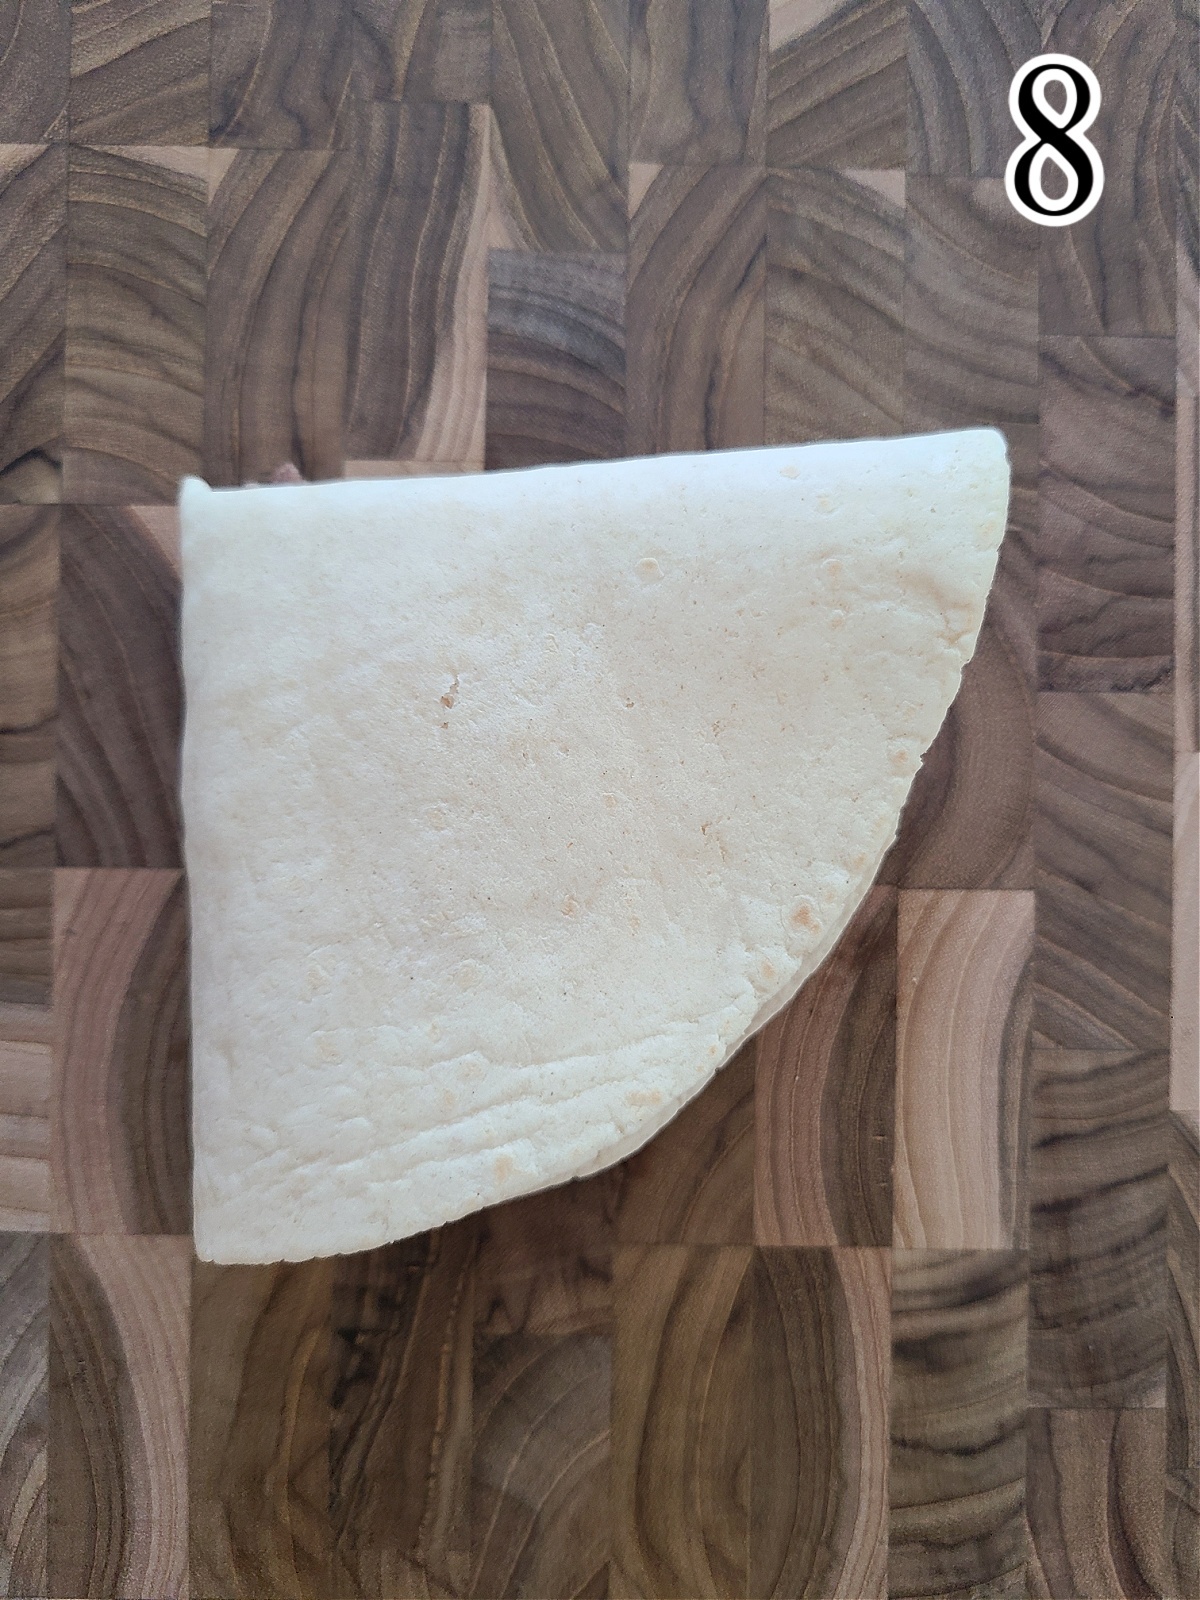 TikTok Tortilla Wrap Instructions